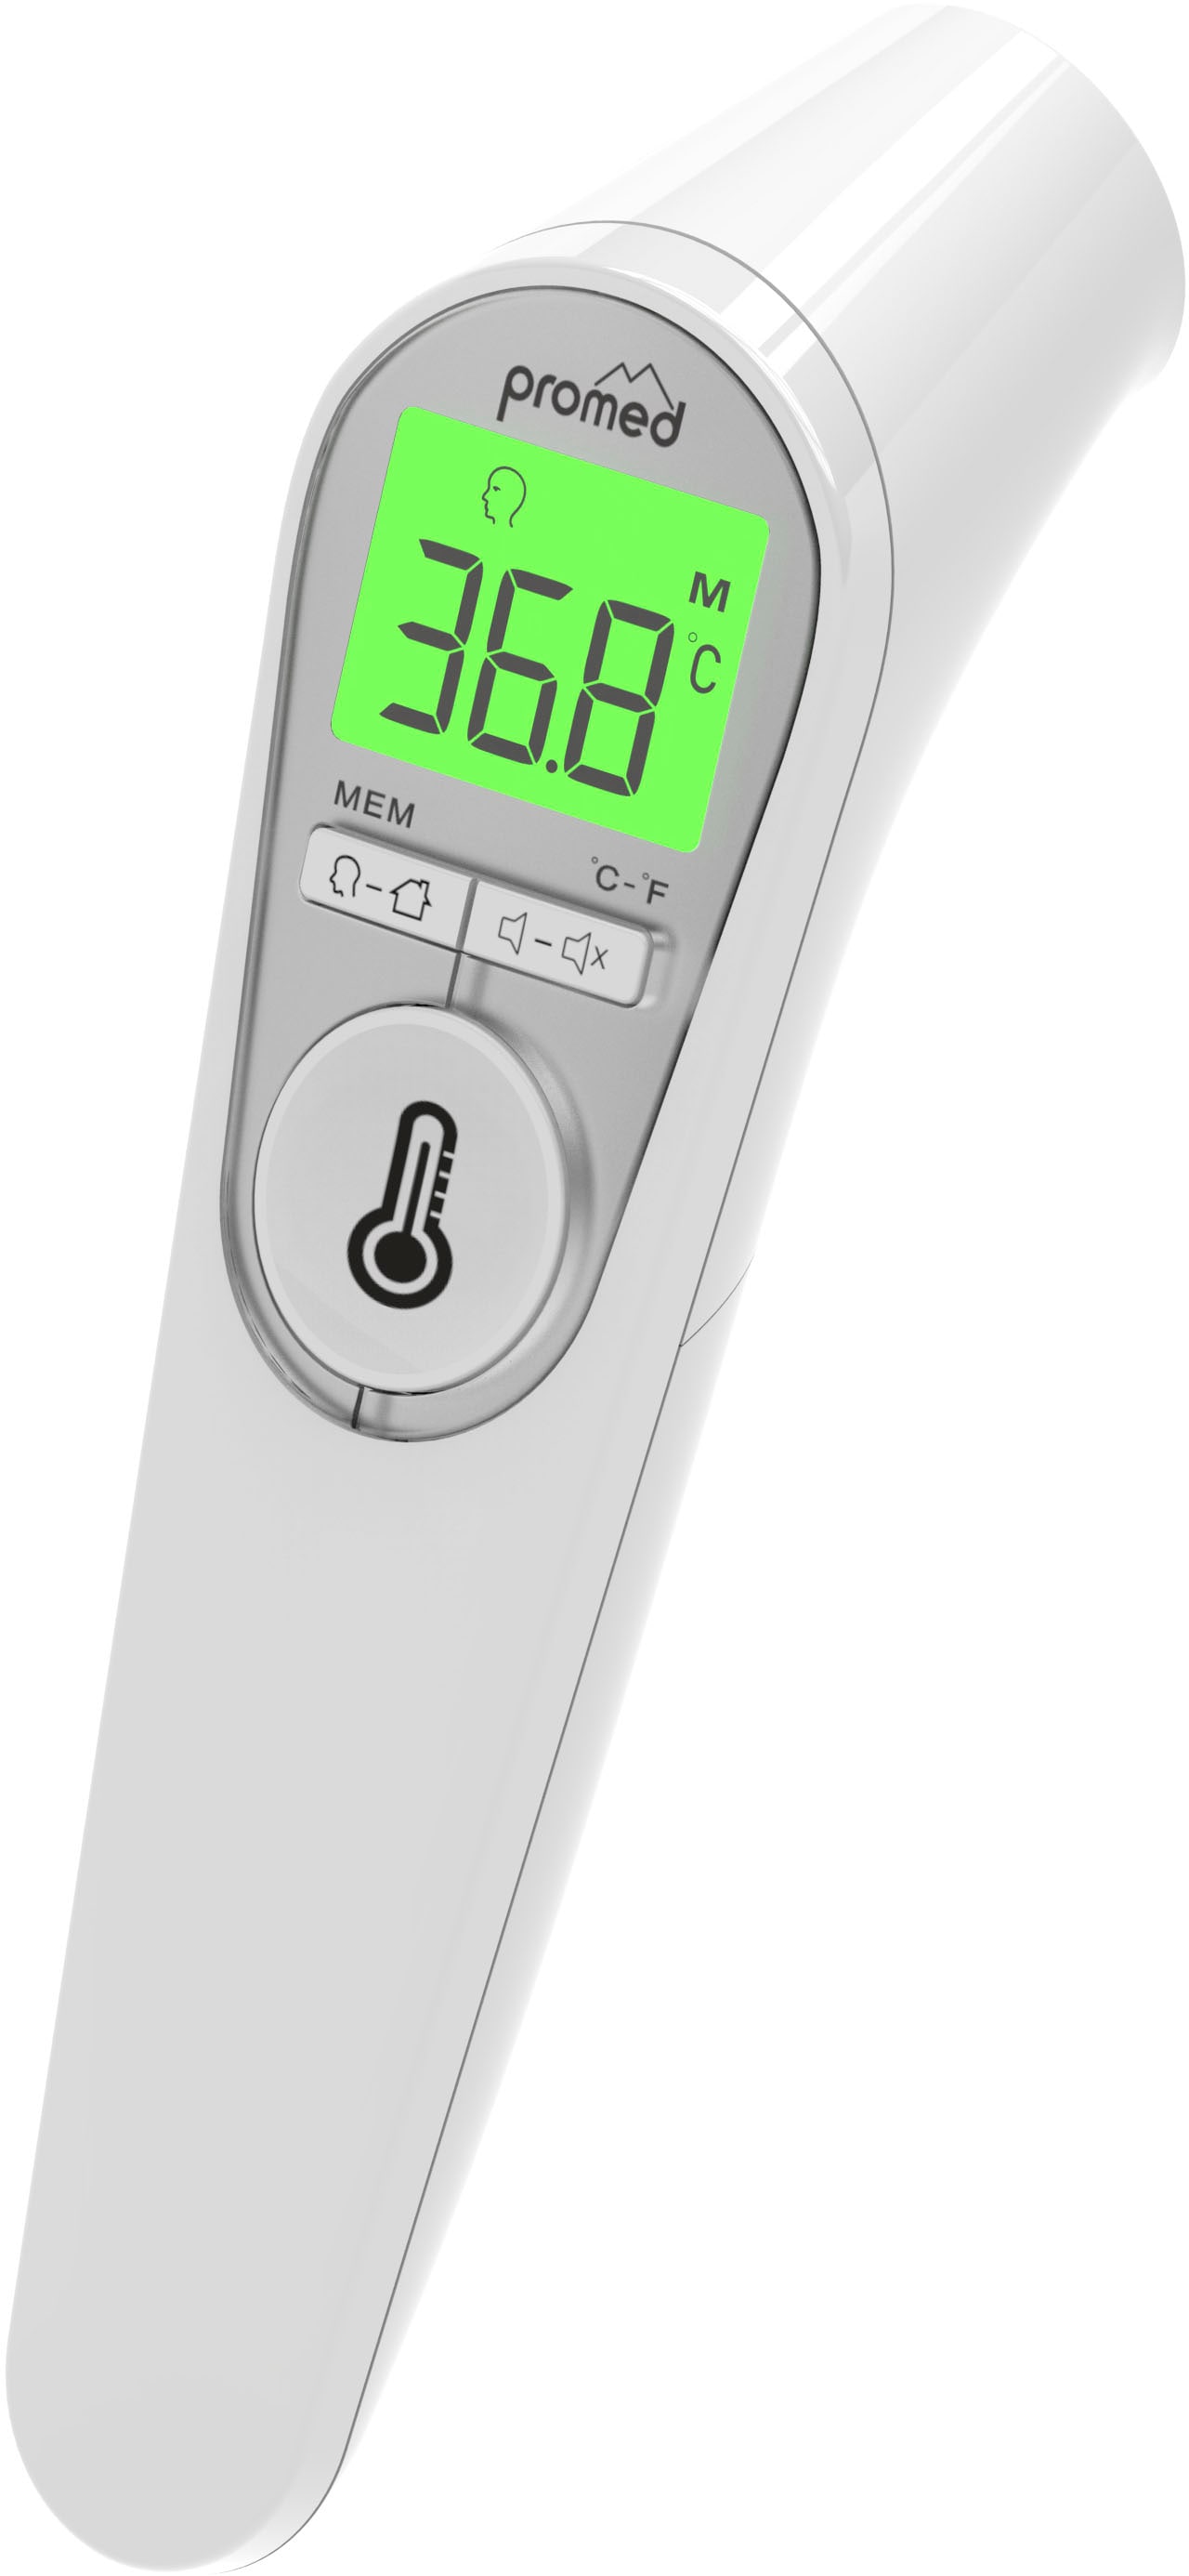 promed Fieberthermometer »IRT-80«